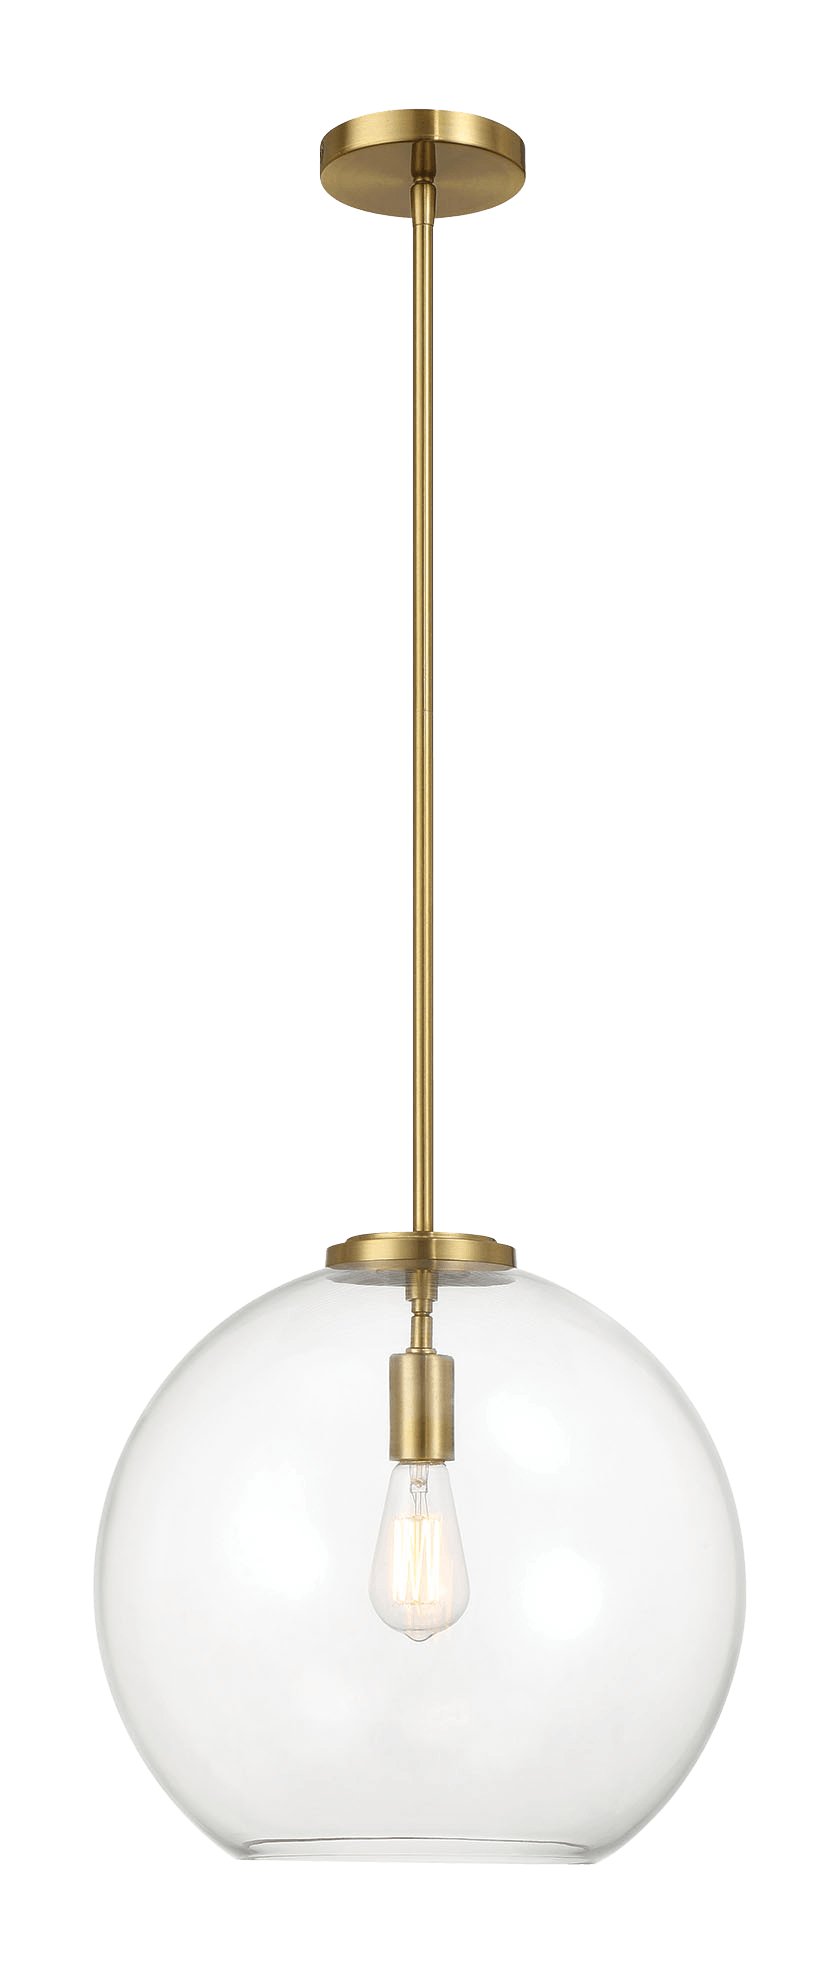 Gleam Single Light Pendant Lamp With Clear Globe Glass - Satin Brass - MidinMod Houston Tx Mid Century Furniture Store - Ceiling Lamp 5